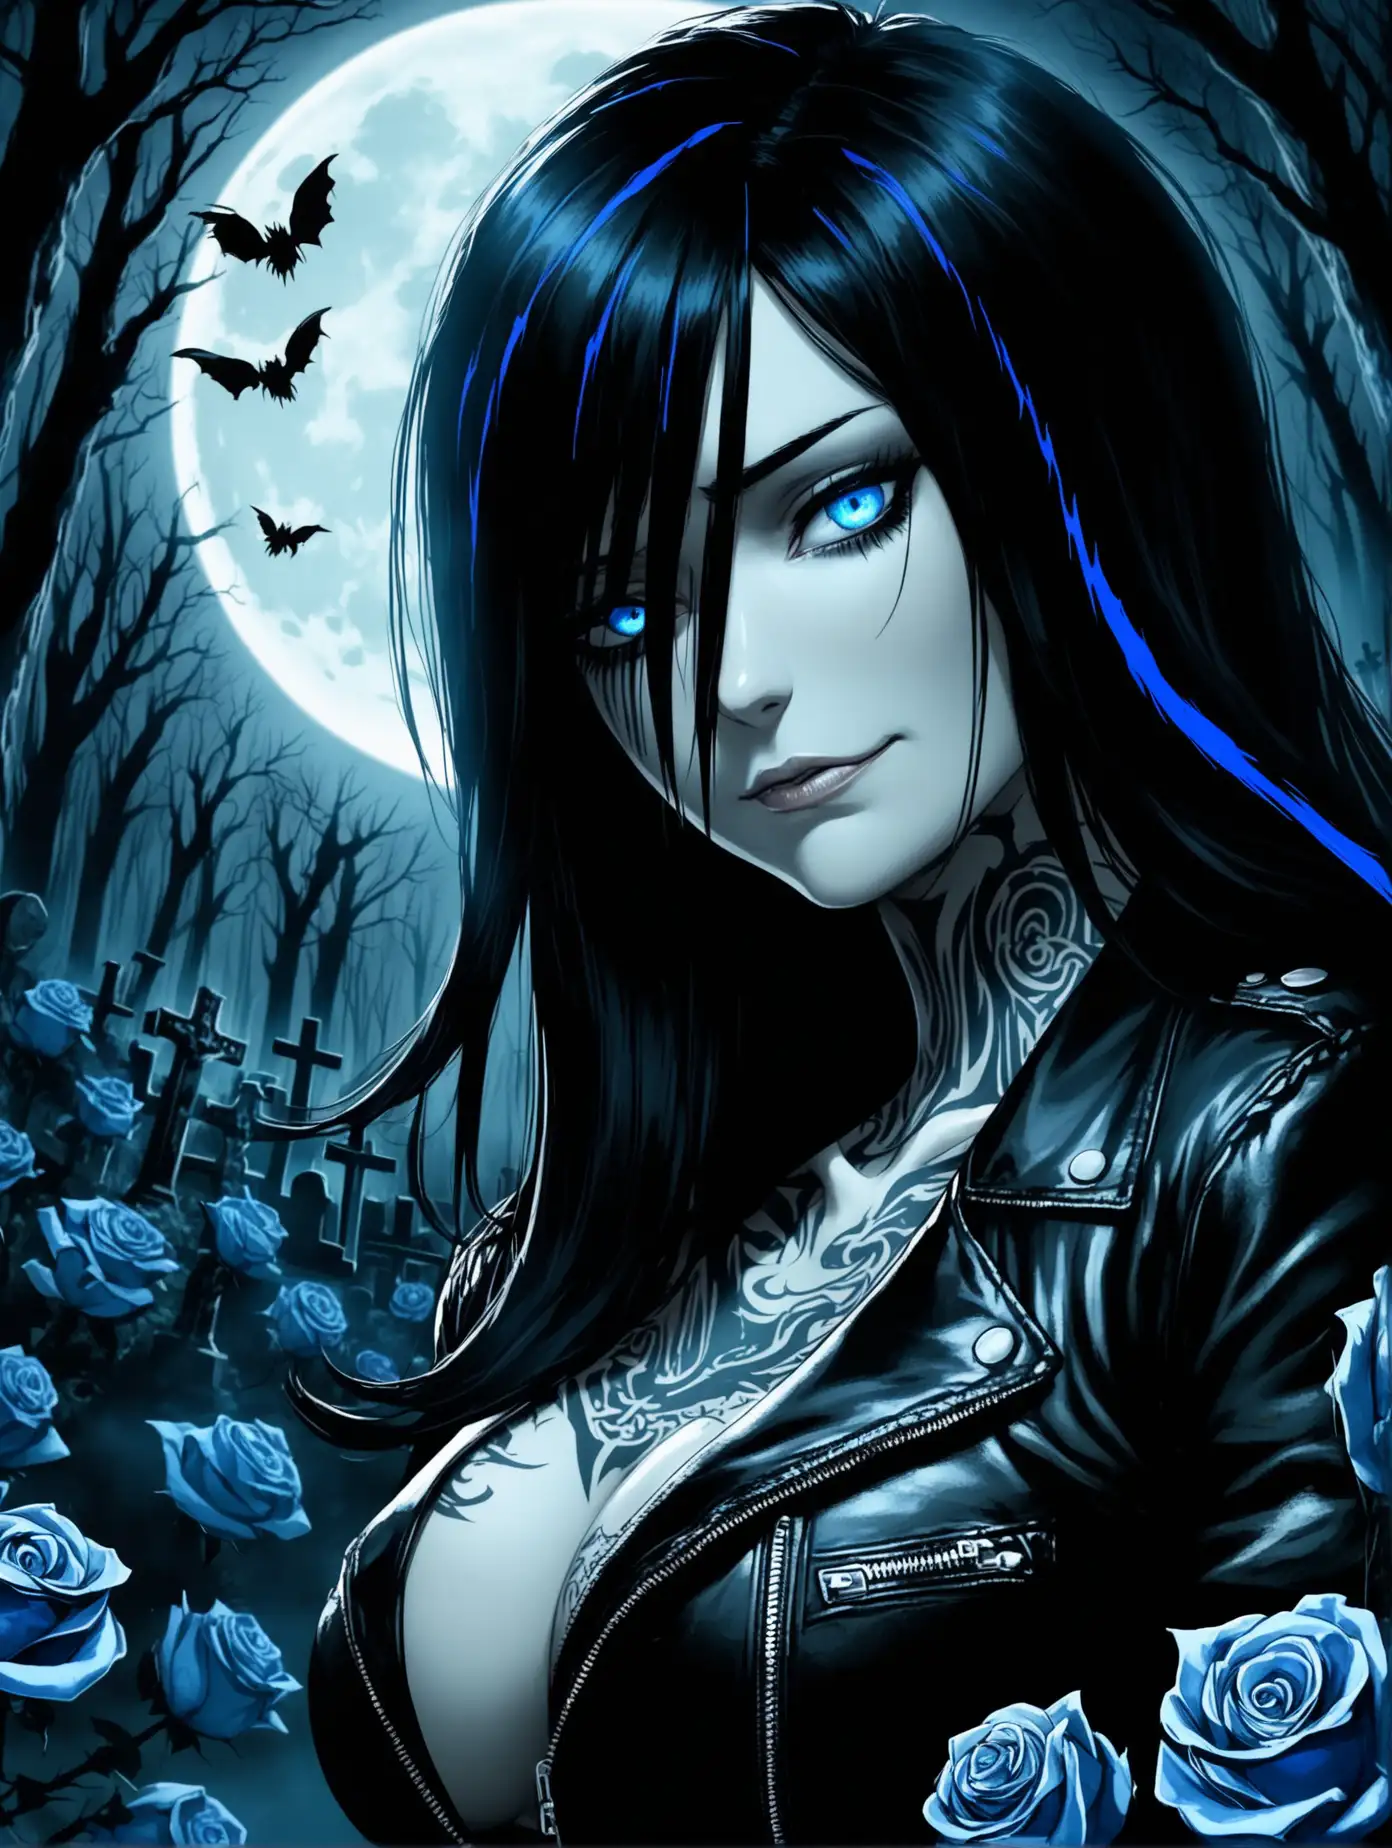 Seductive-Woman-with-Blue-Streak-in-Dark-Forest-Cemetery